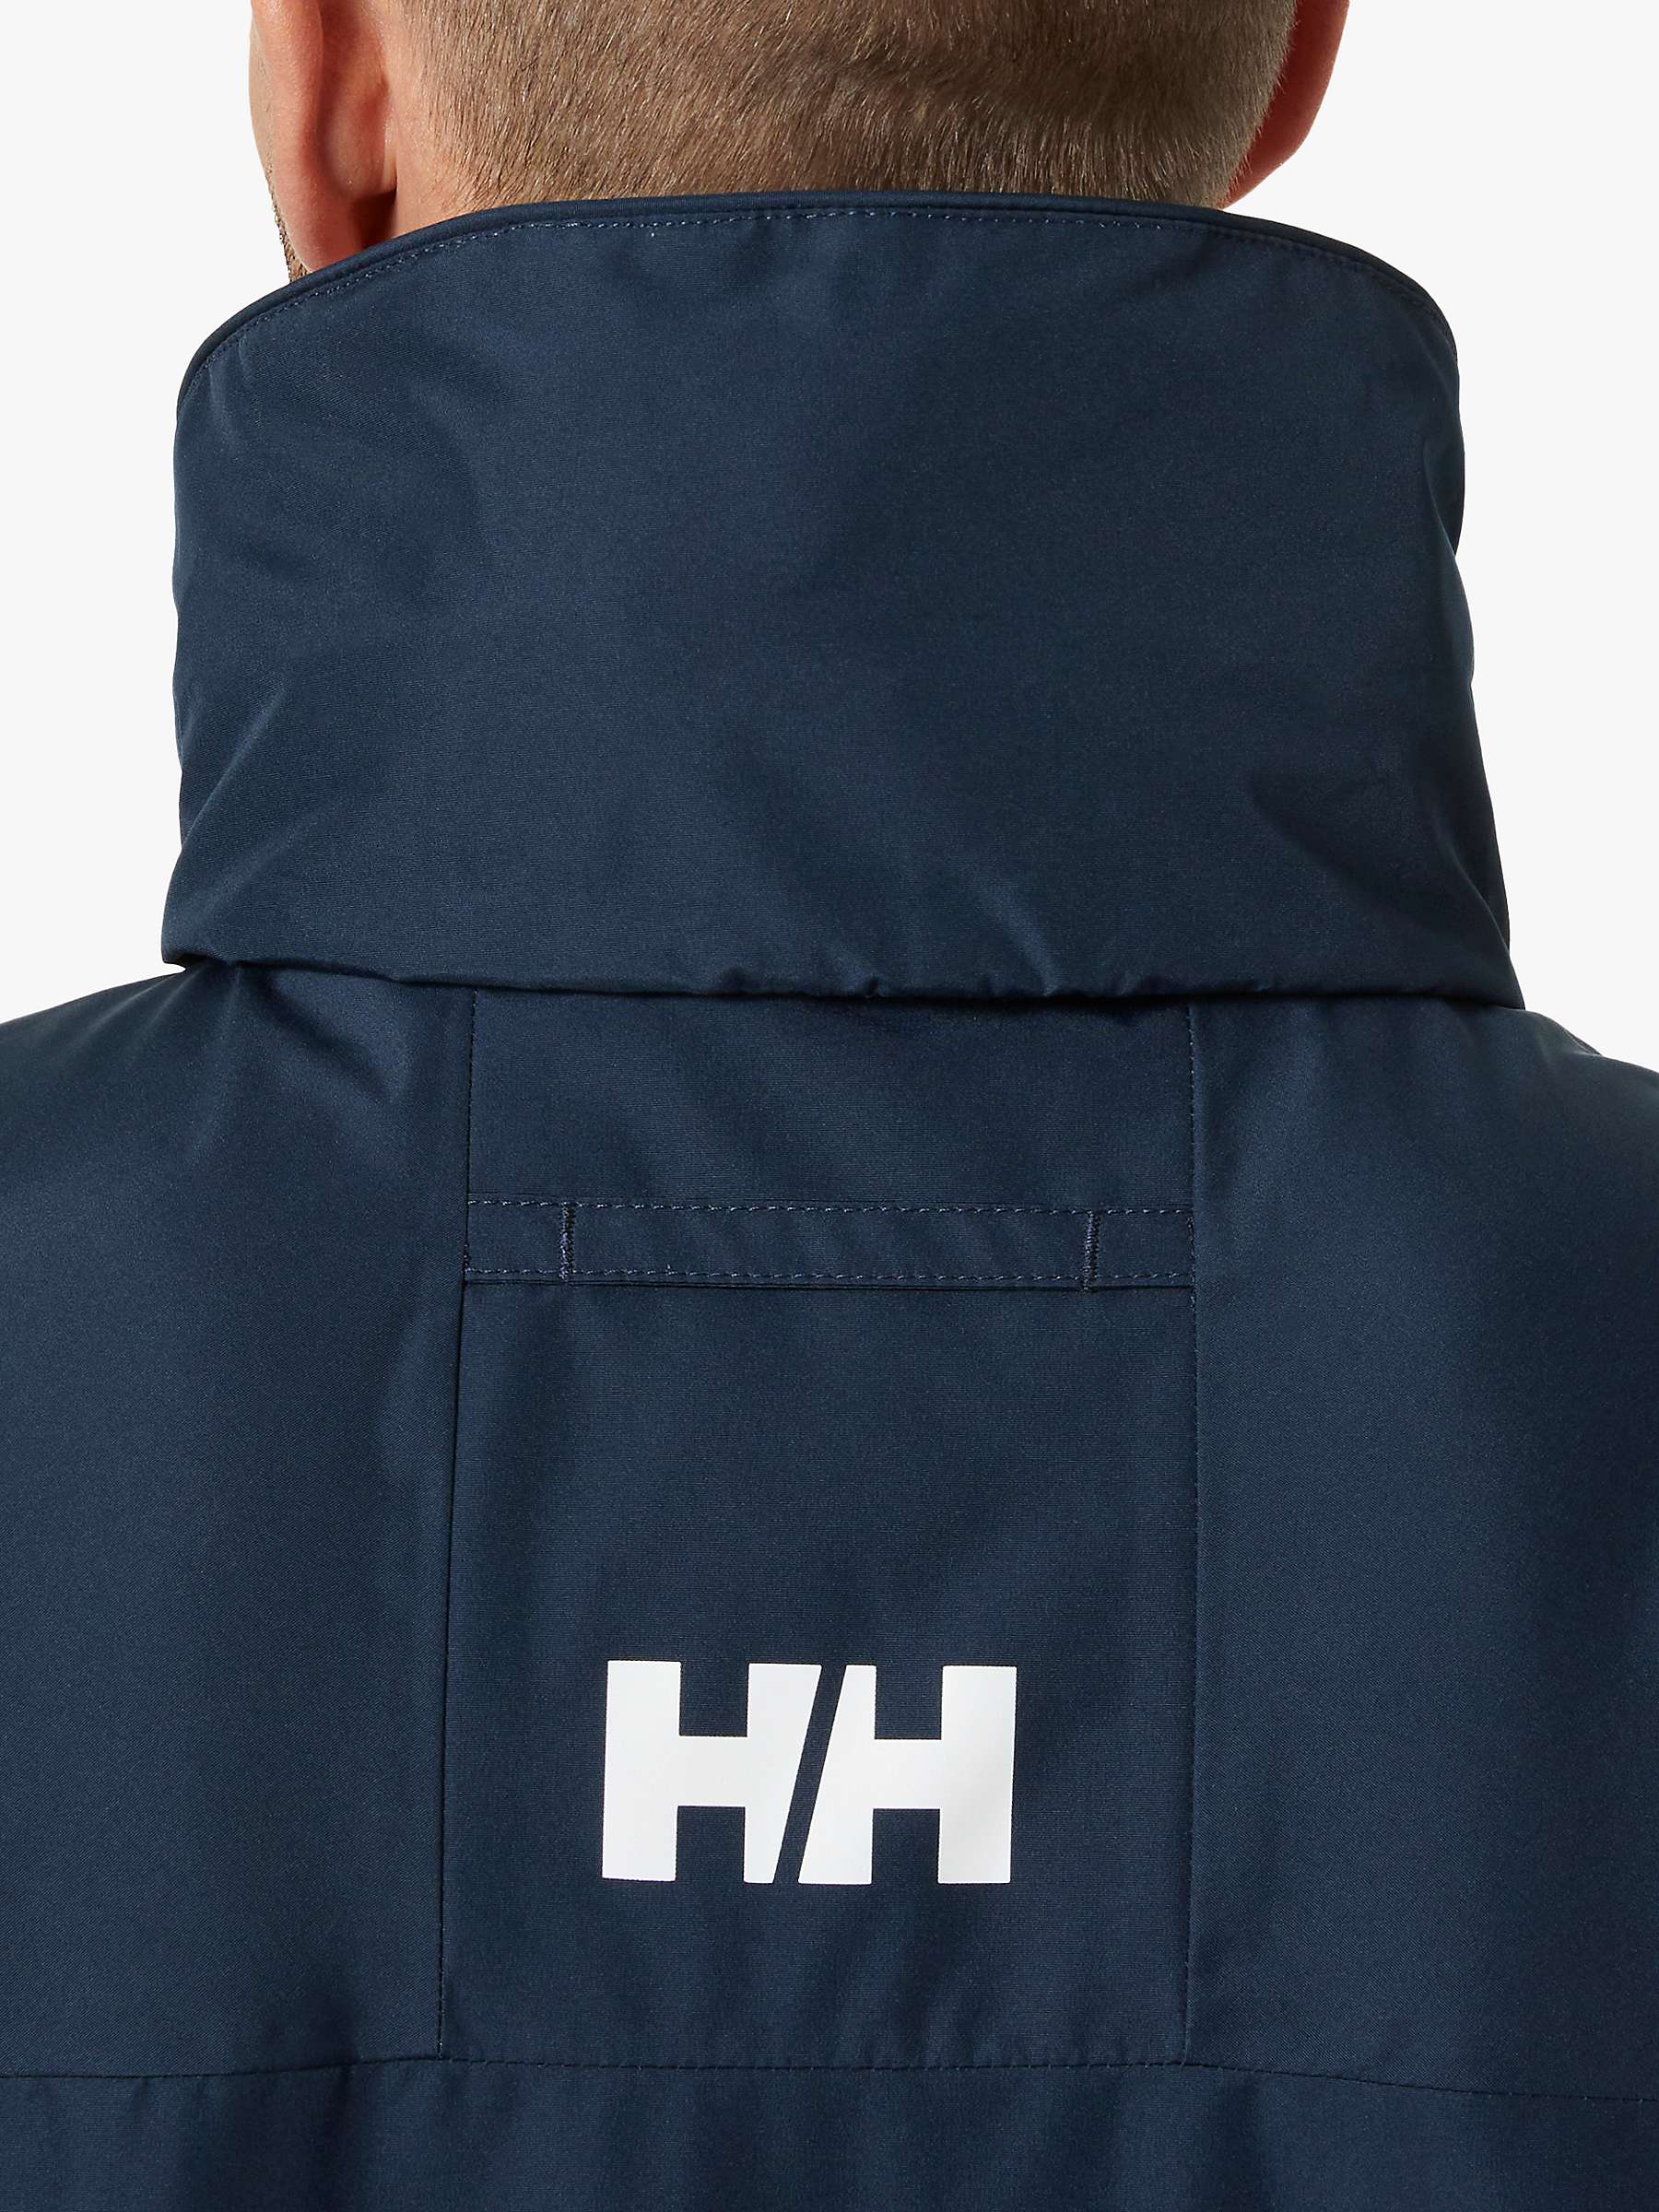 Buy Helly Hansen Salt Insore Waterproof Sailing Jacket, Navy Online at johnlewis.com